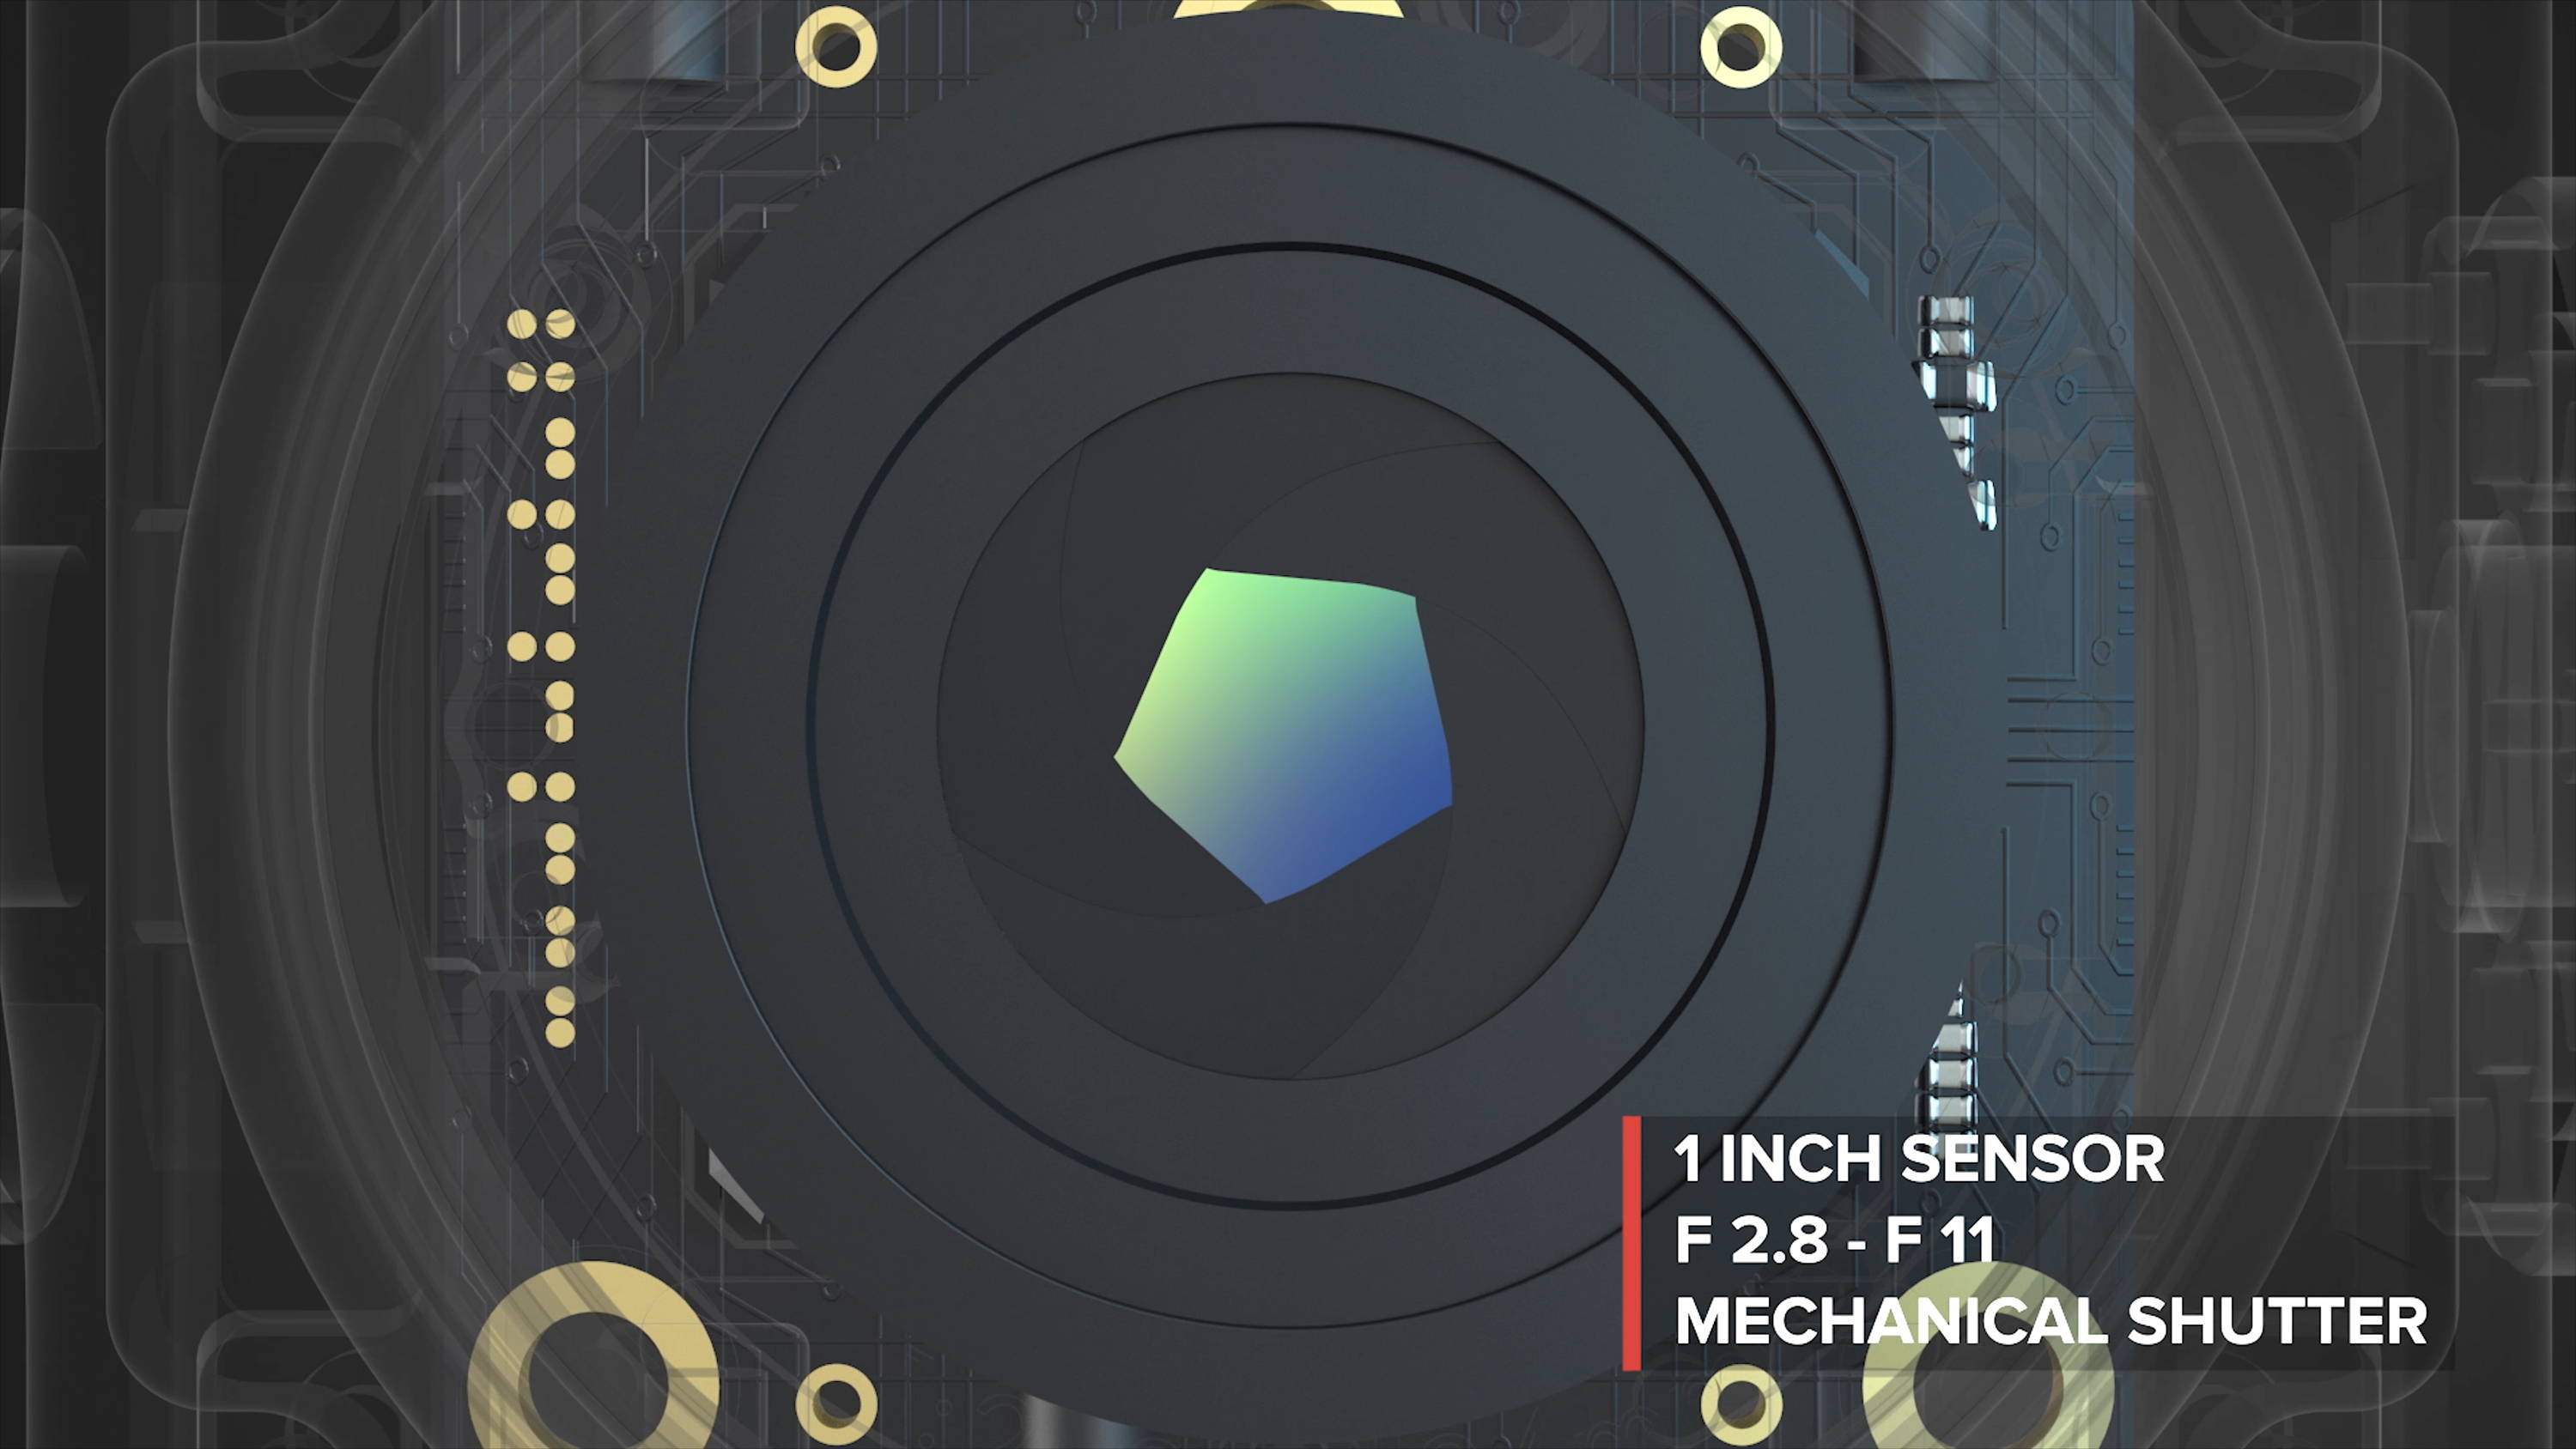 Phantom 4 Pro 1-inch sensor